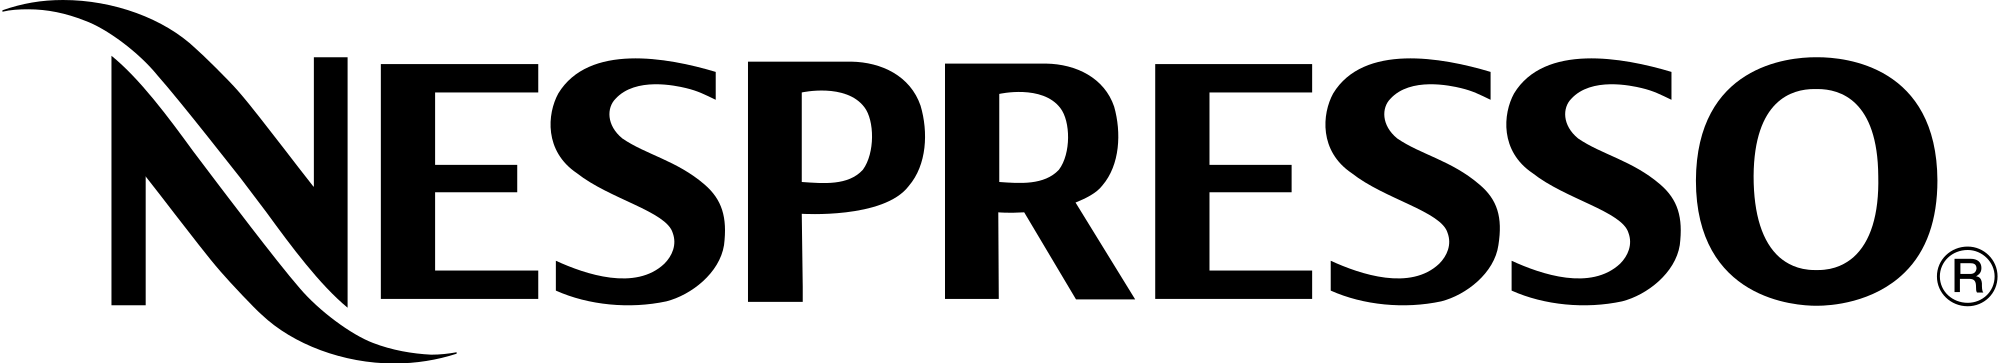 AriseHealth logo